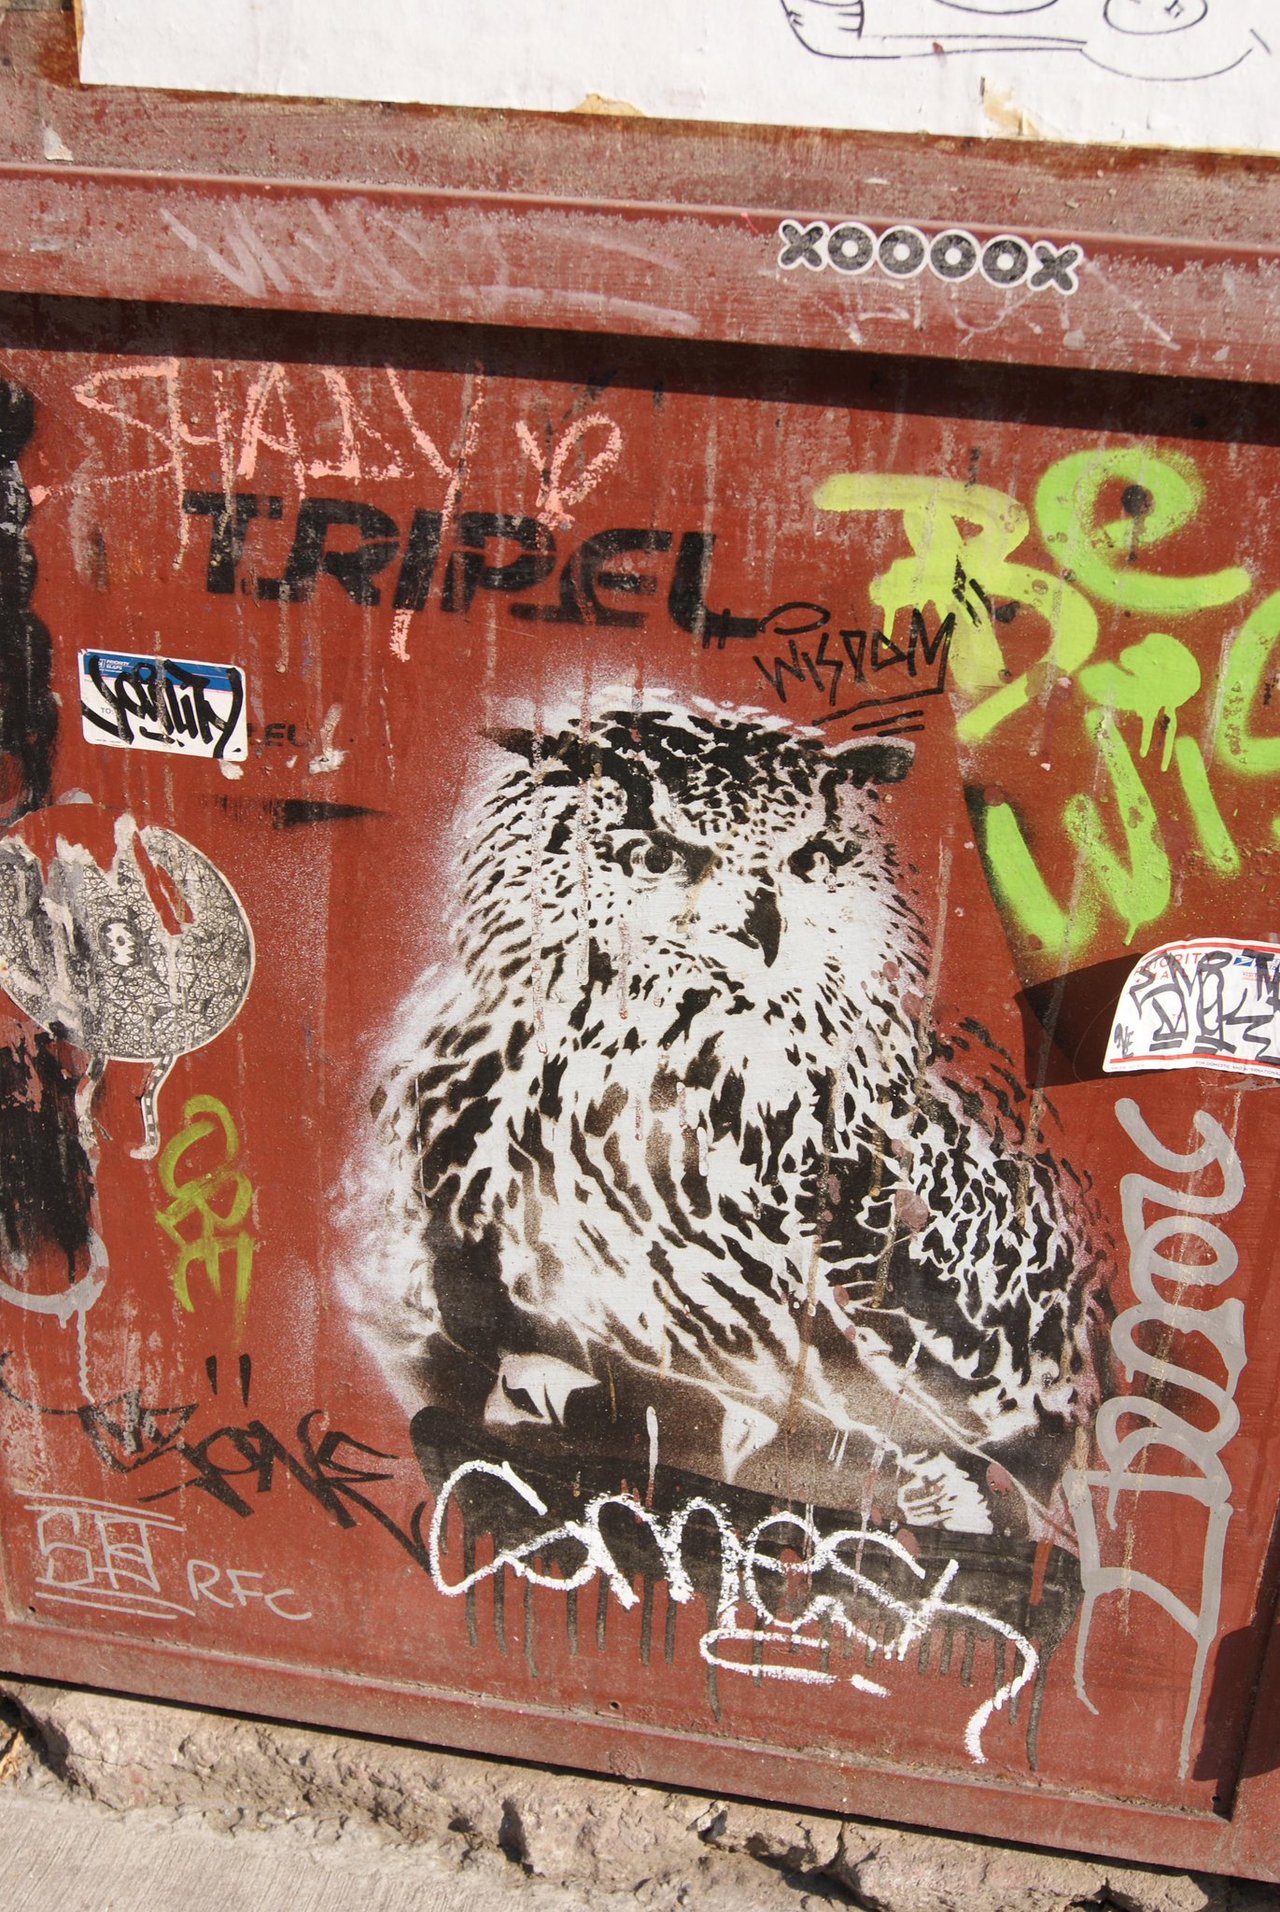 RT @okerbay: 🇺🇸From Brooklyn to Manhattan🇺🇸 
#art #graffiti #mural #streetart #okerbay http://t.co/HnLKMc8jyG